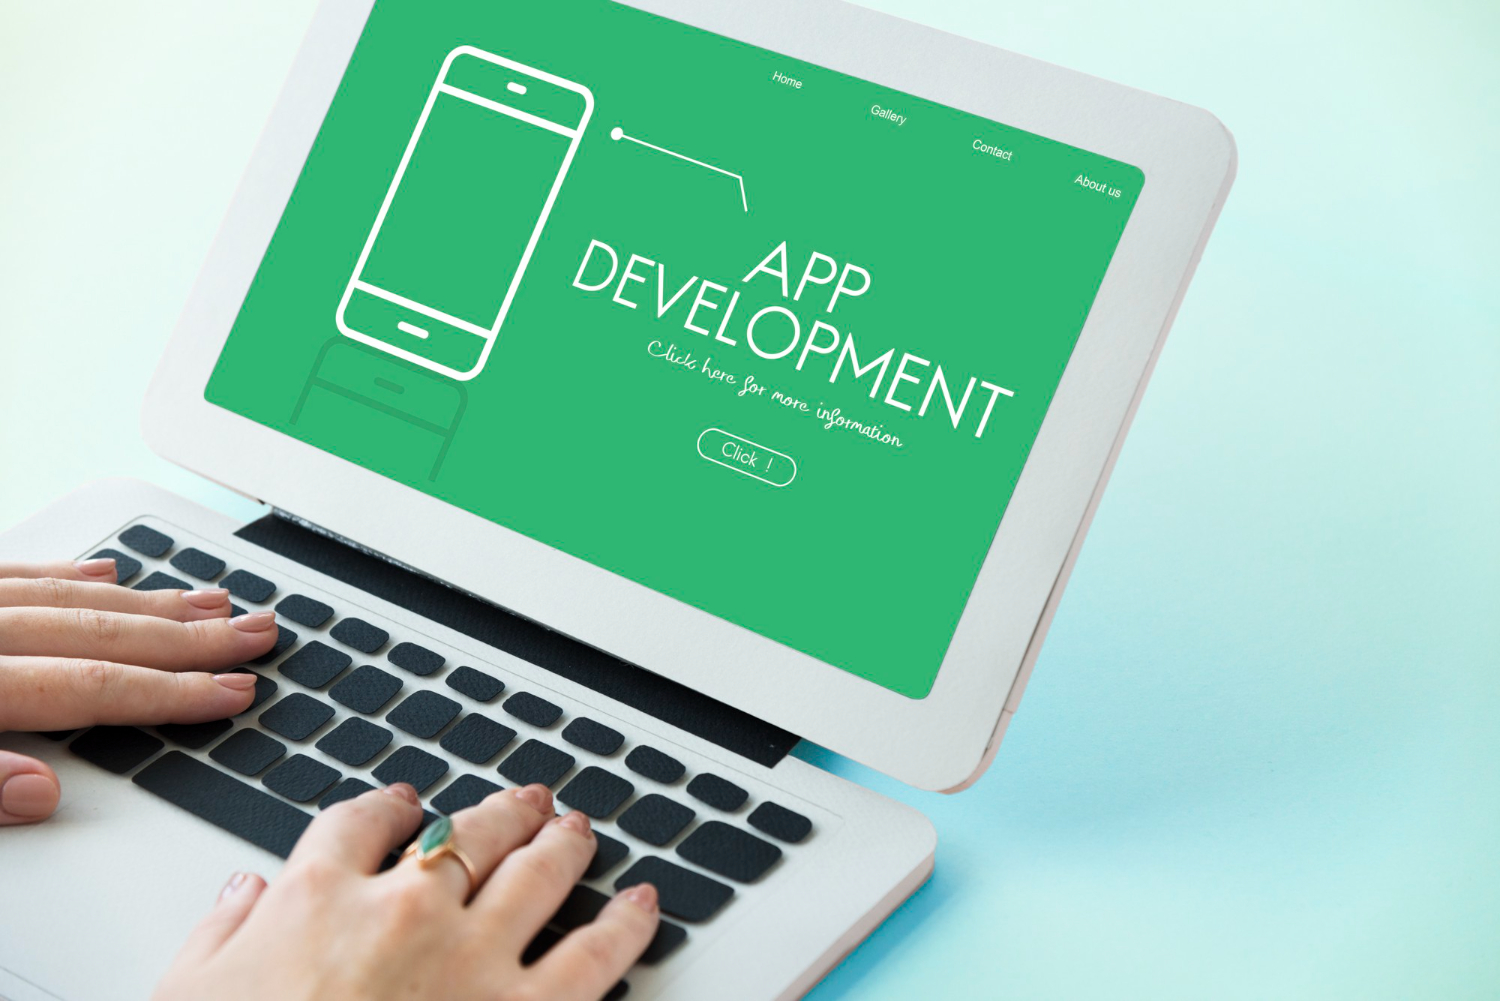 Web development applications